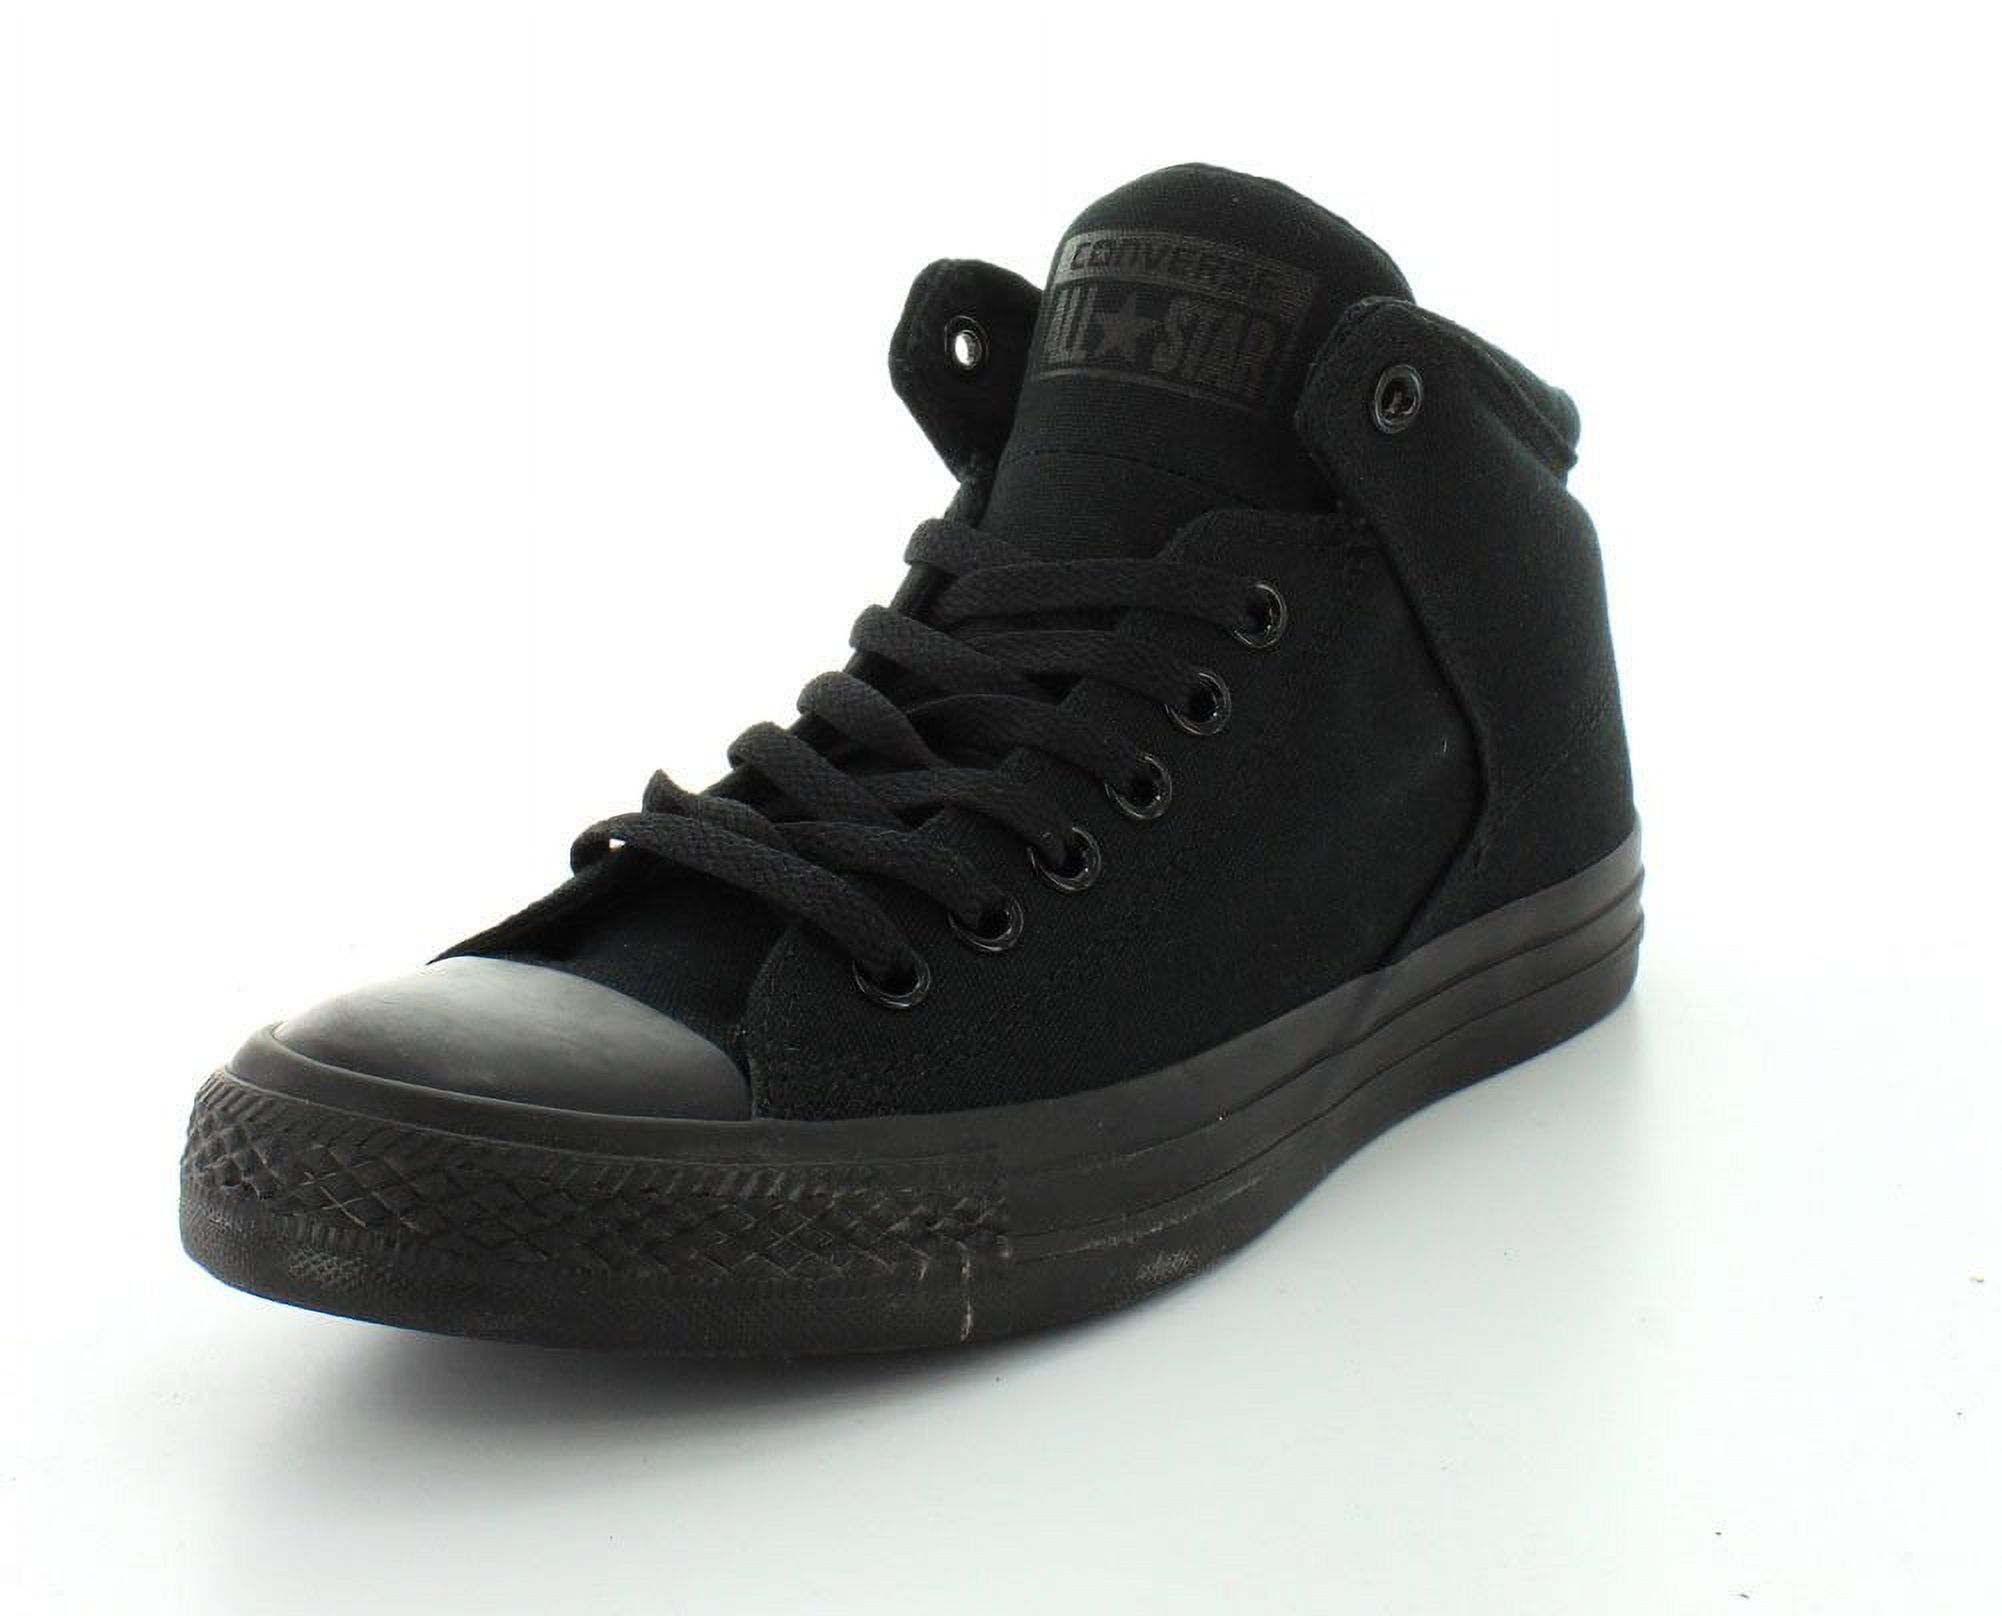 Converse Men's Street Canvas High Top Sneaker, Black/Black/Black, 12 M US - image 1 of 5